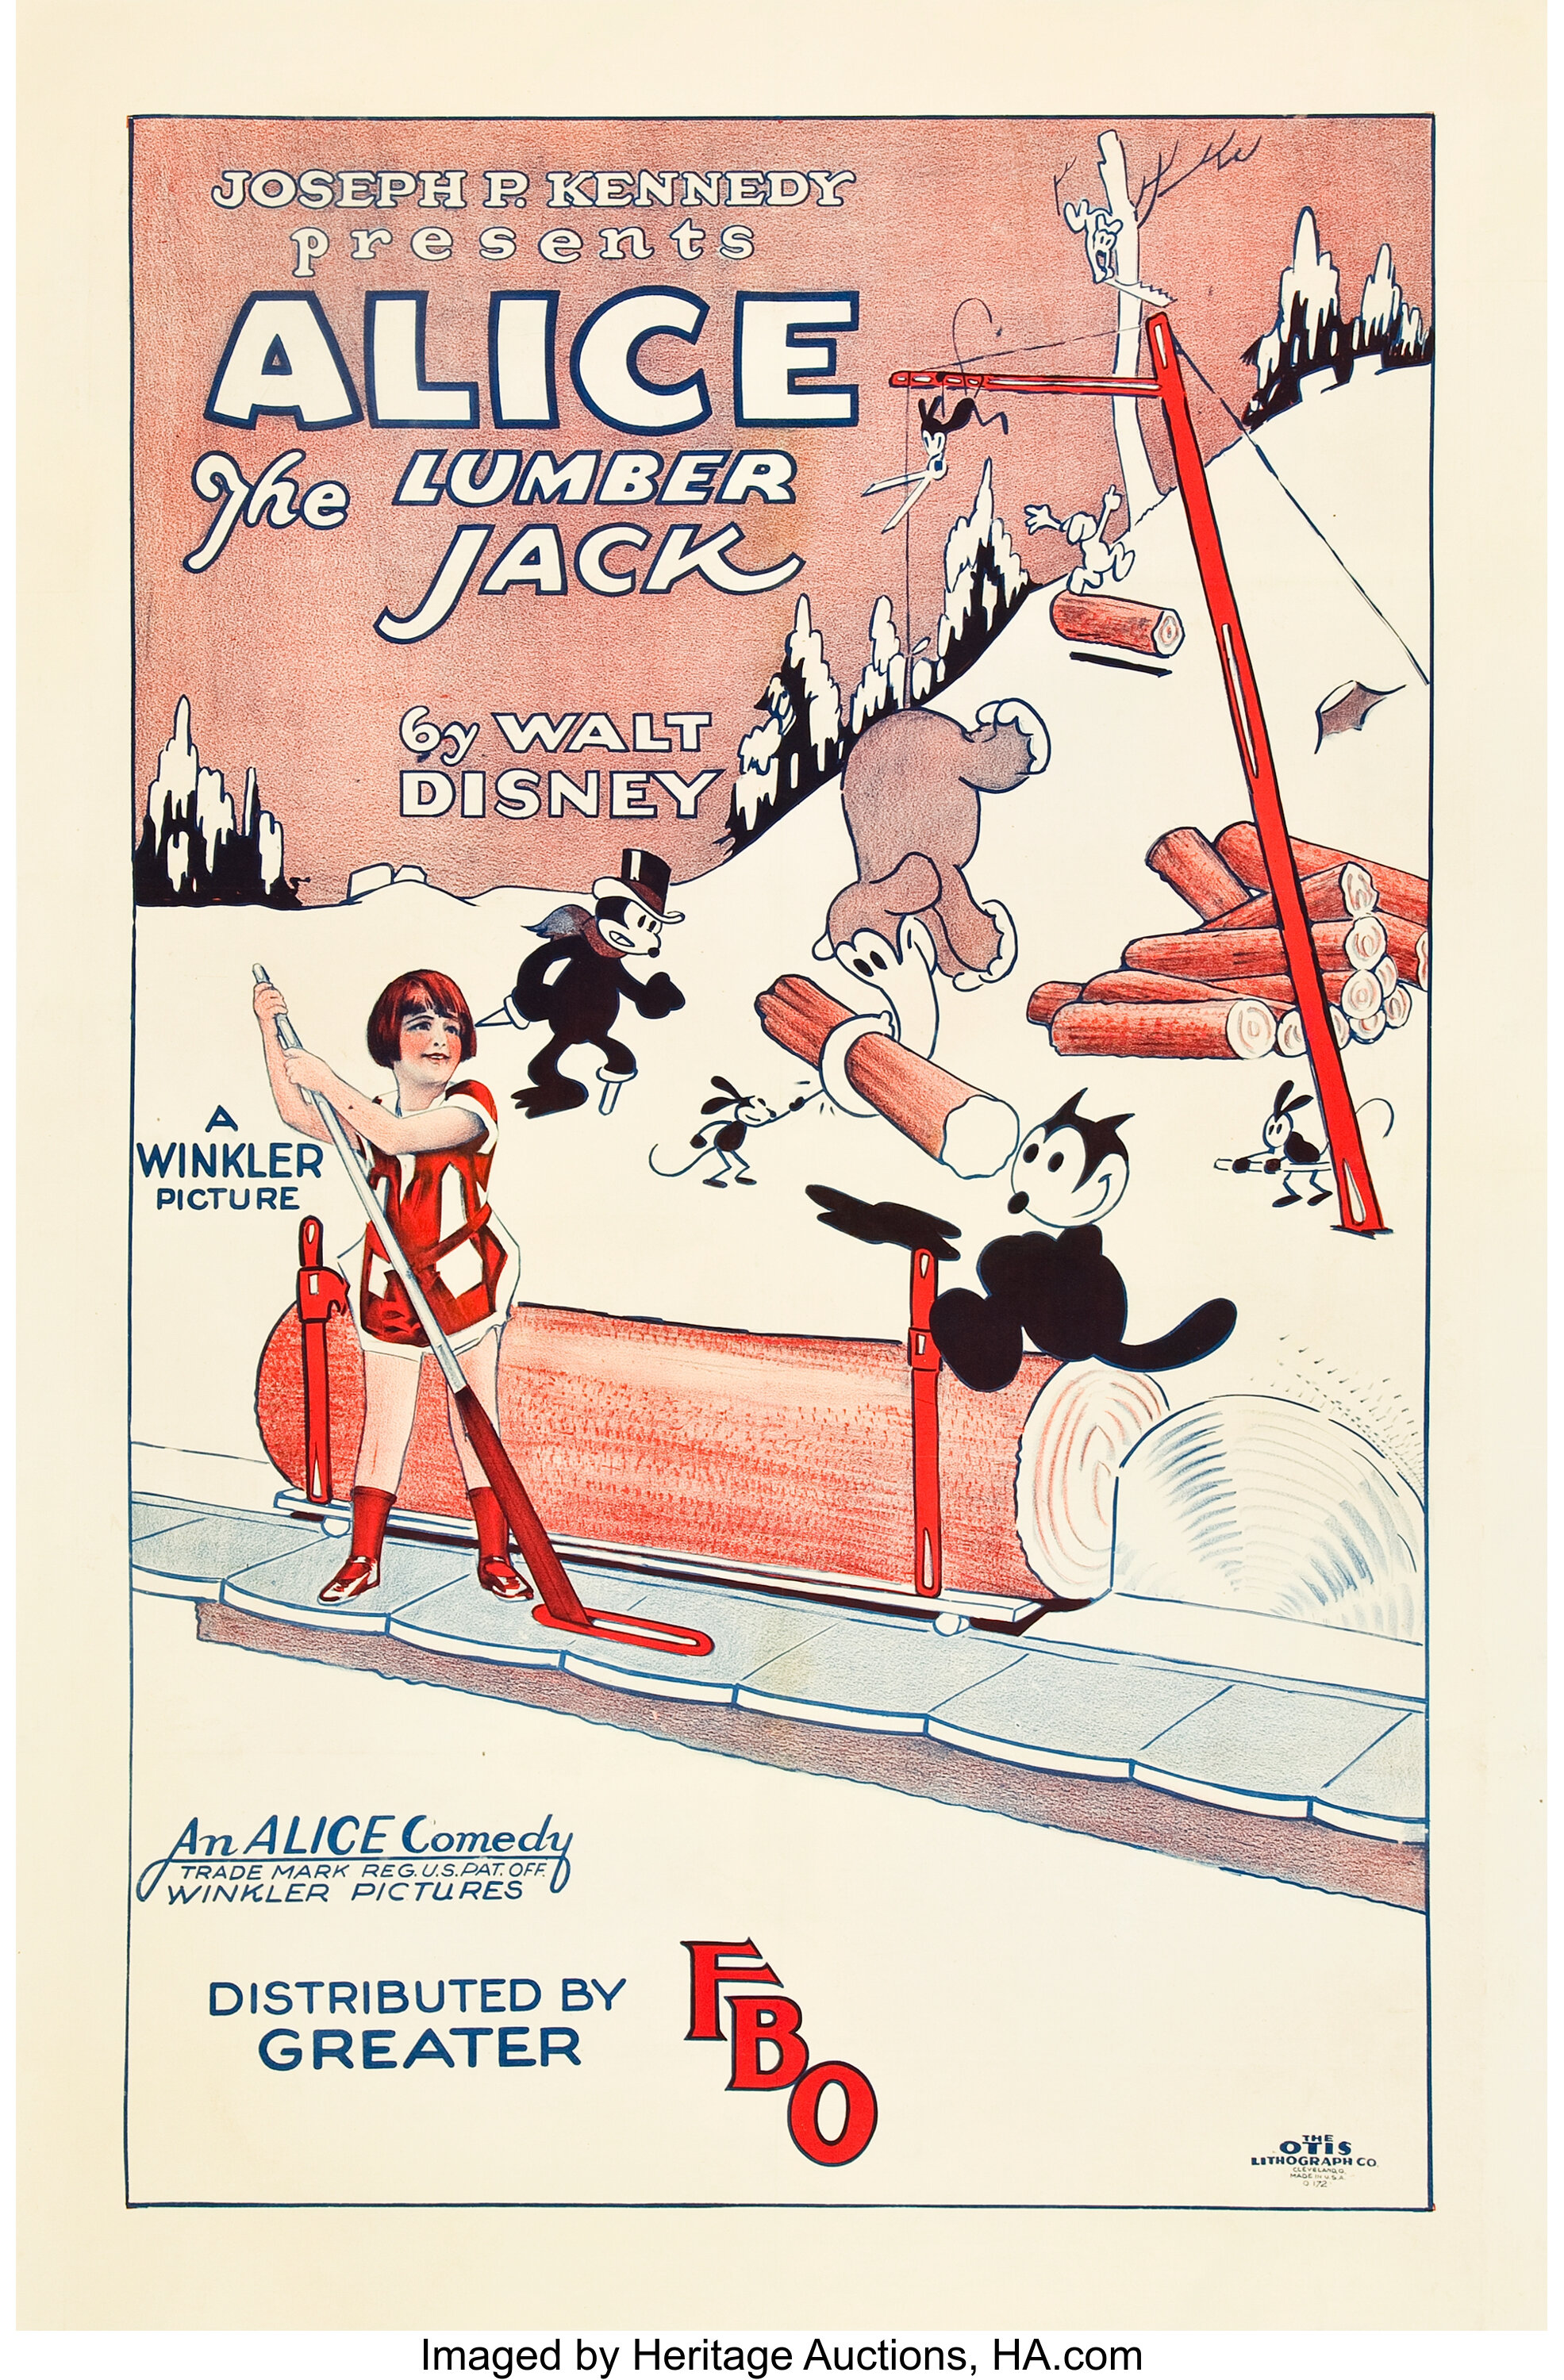 Walt Disney S Alice The Lumberjack Fbo 1926 One Sheet 27 X Lot 081 Heritage Auctions